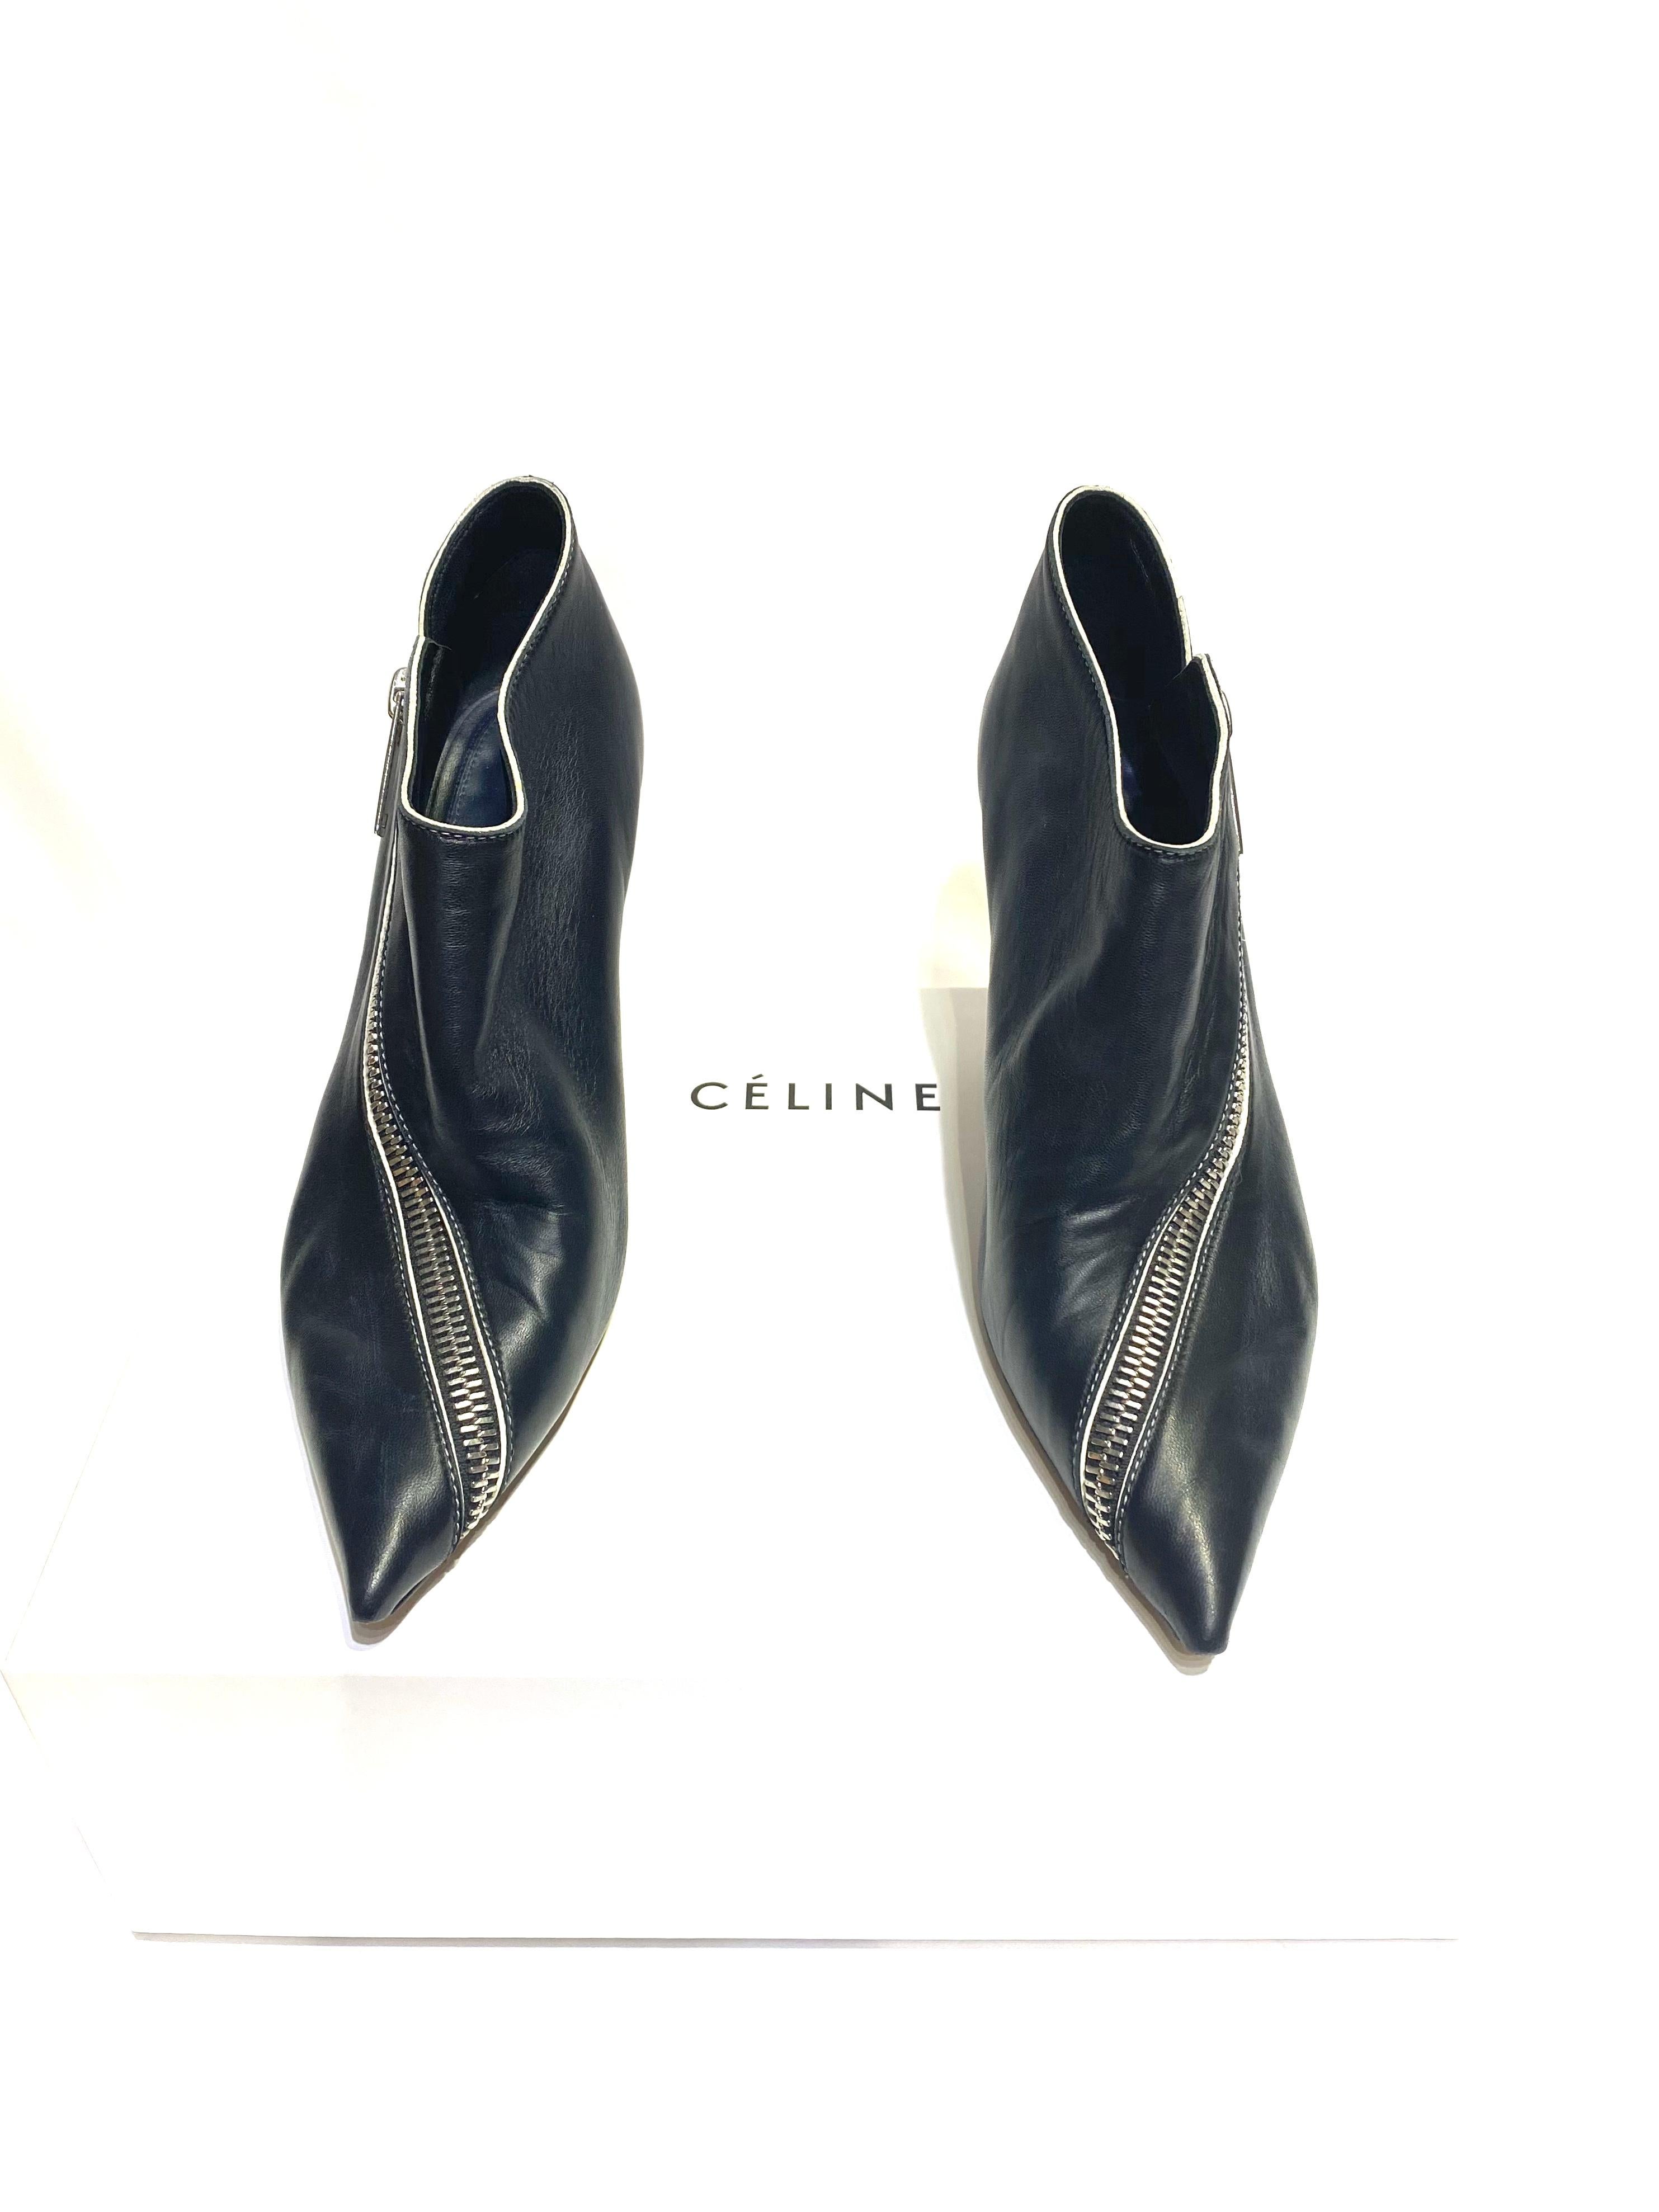 Celine Low Boot 90 Zip Nappa Leather Black Zipper Size 8.5/ 38.5 2